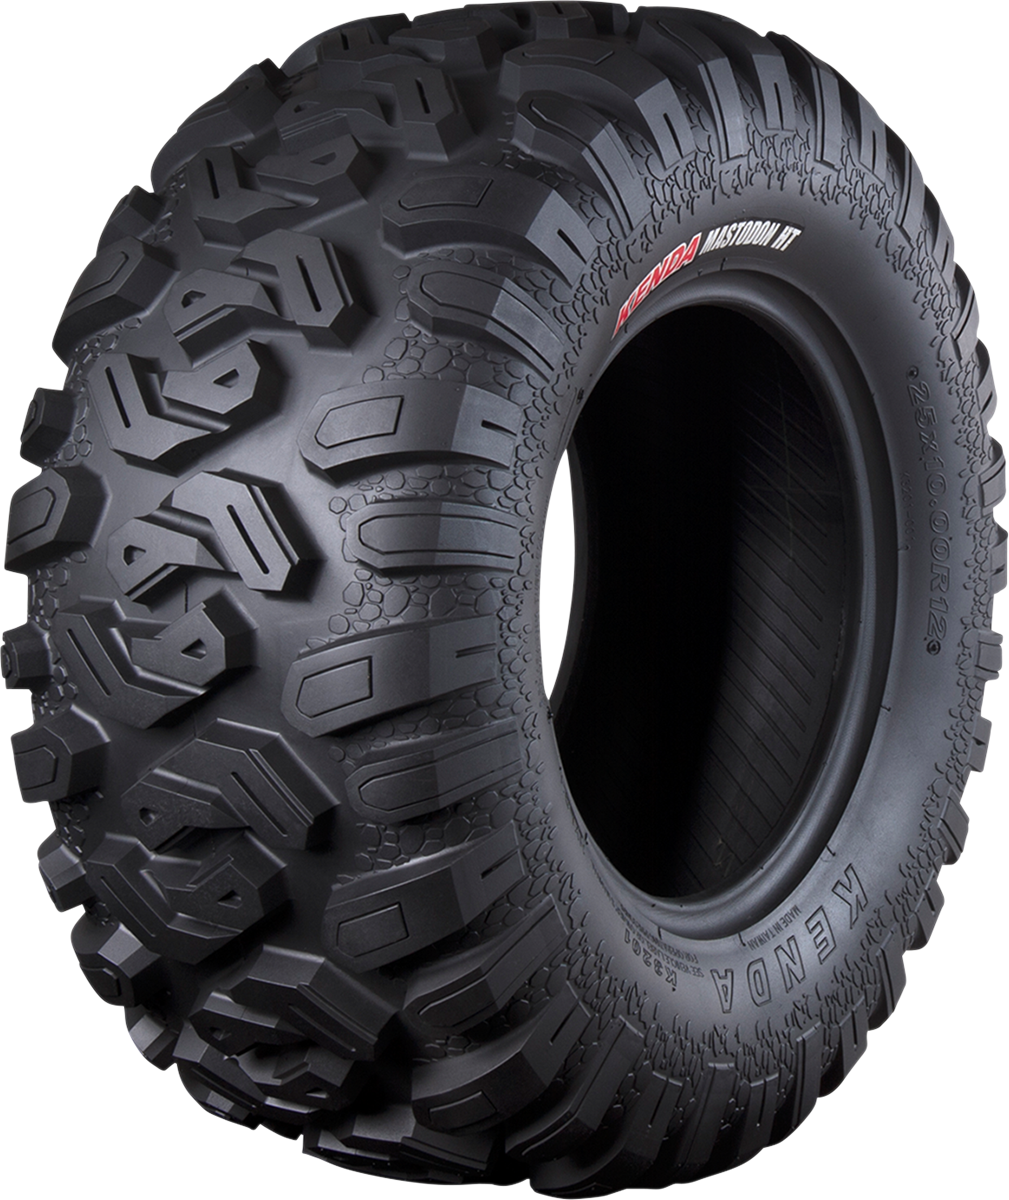 Tire - K3201 - Mastodon HT - 28x10R14